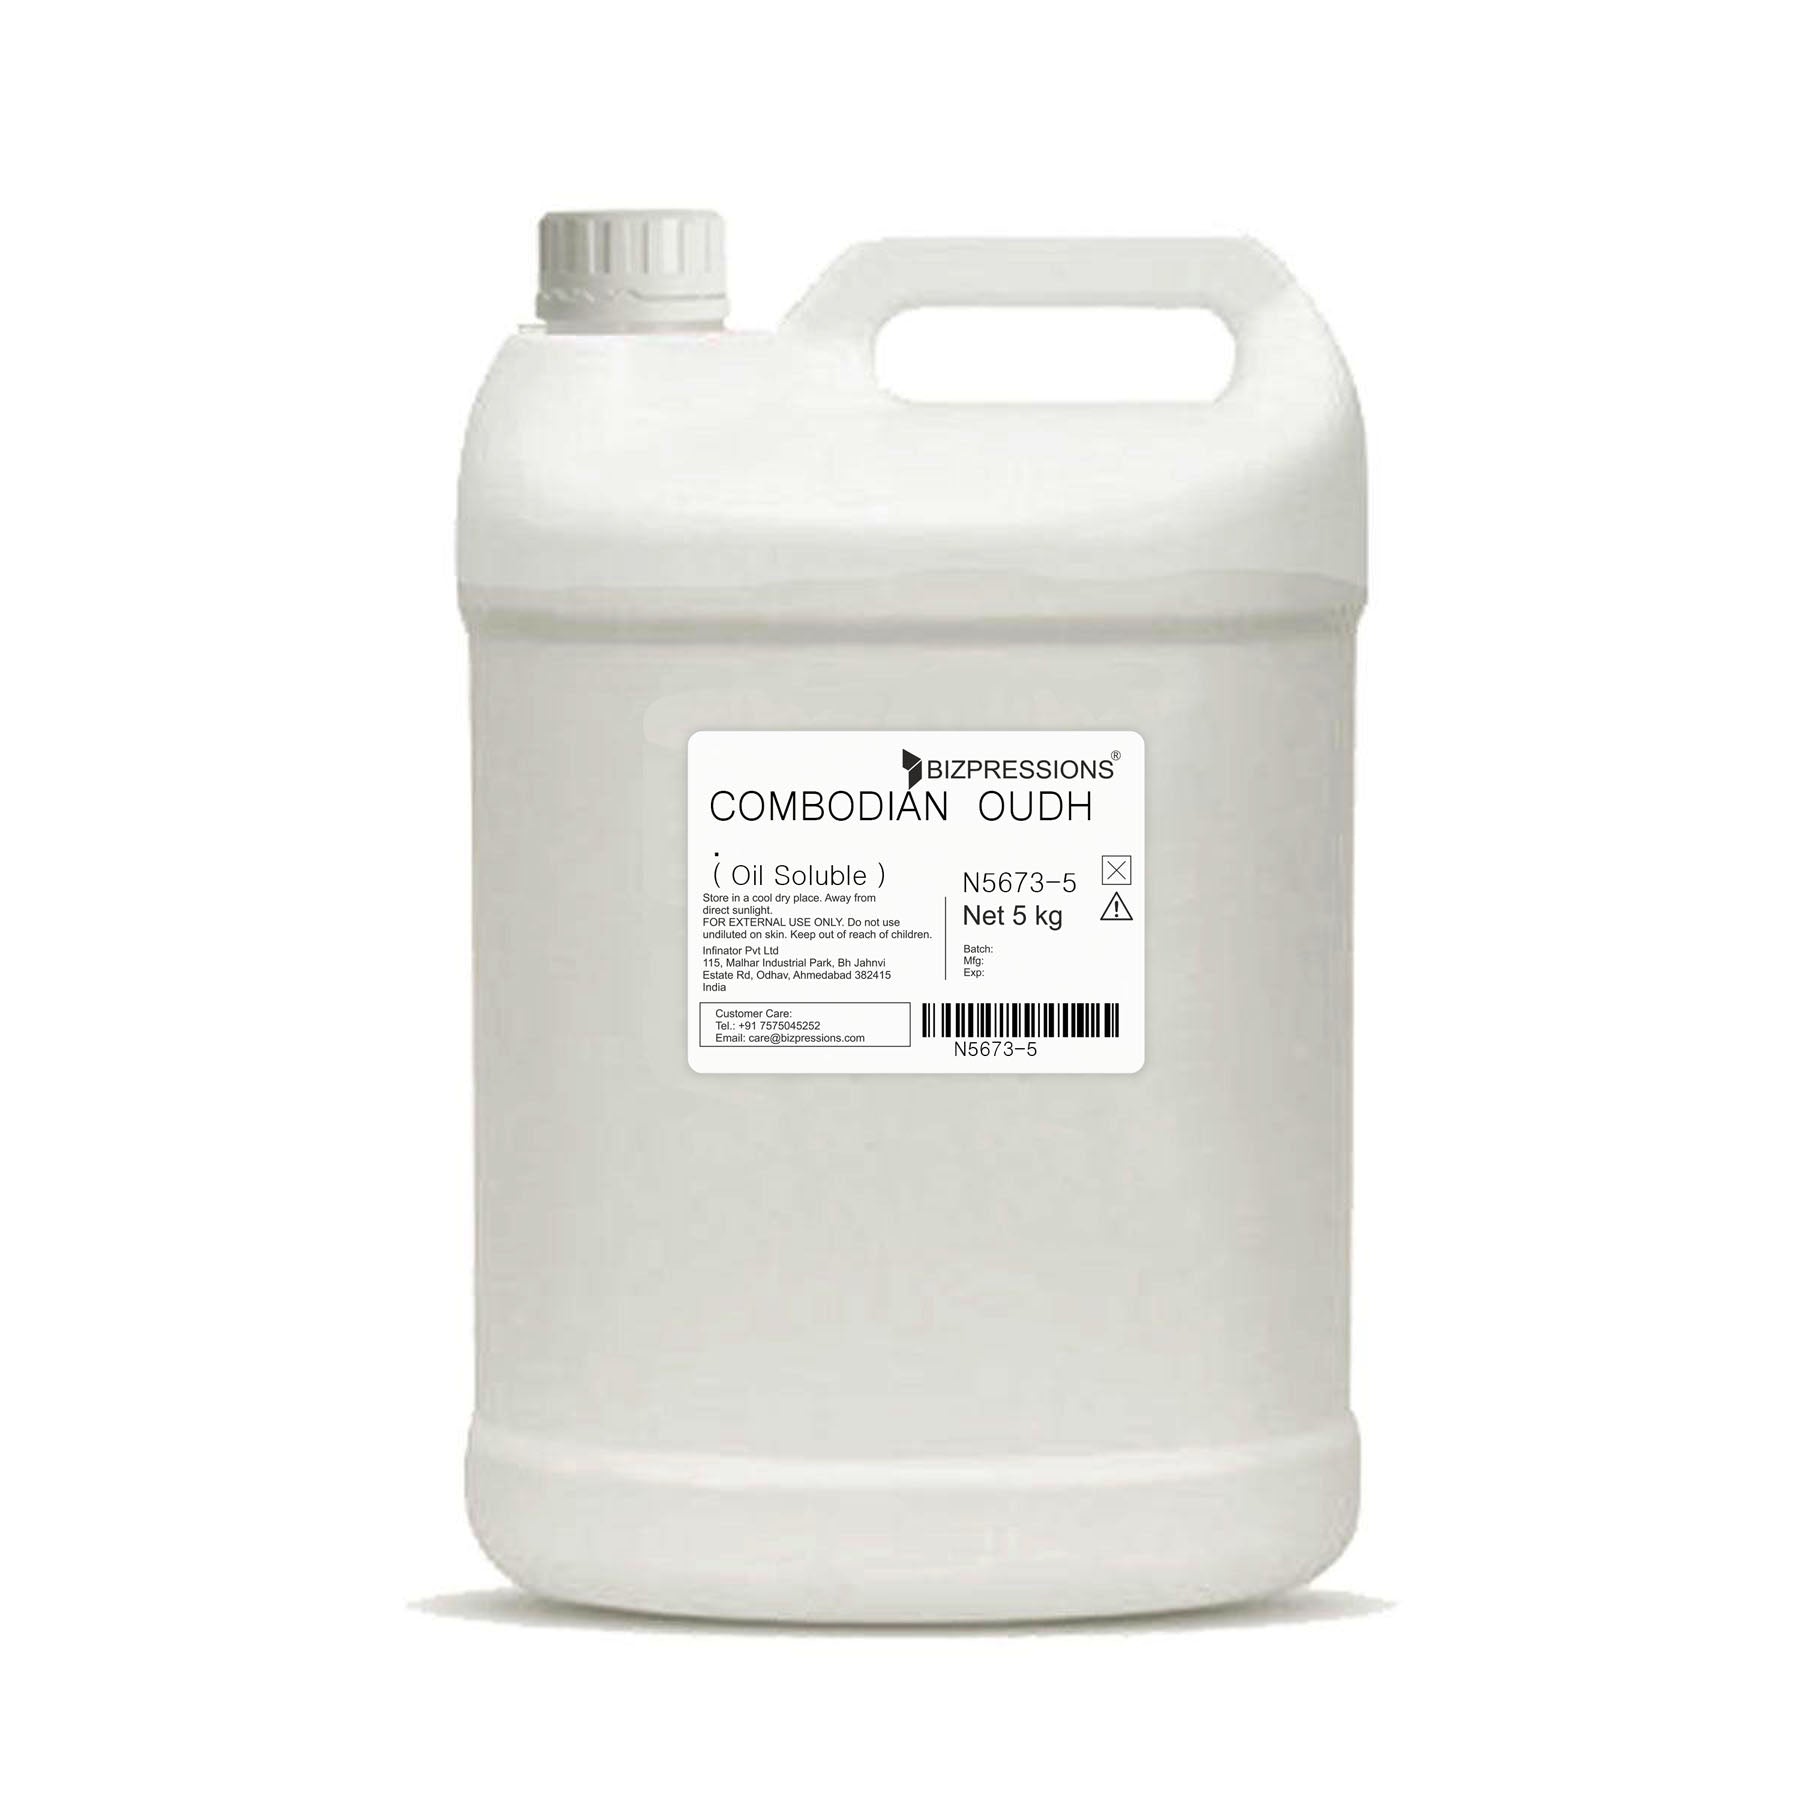 COMBODIAN OUDH - Fragrance ( Oil Soluble ) - 5 kg